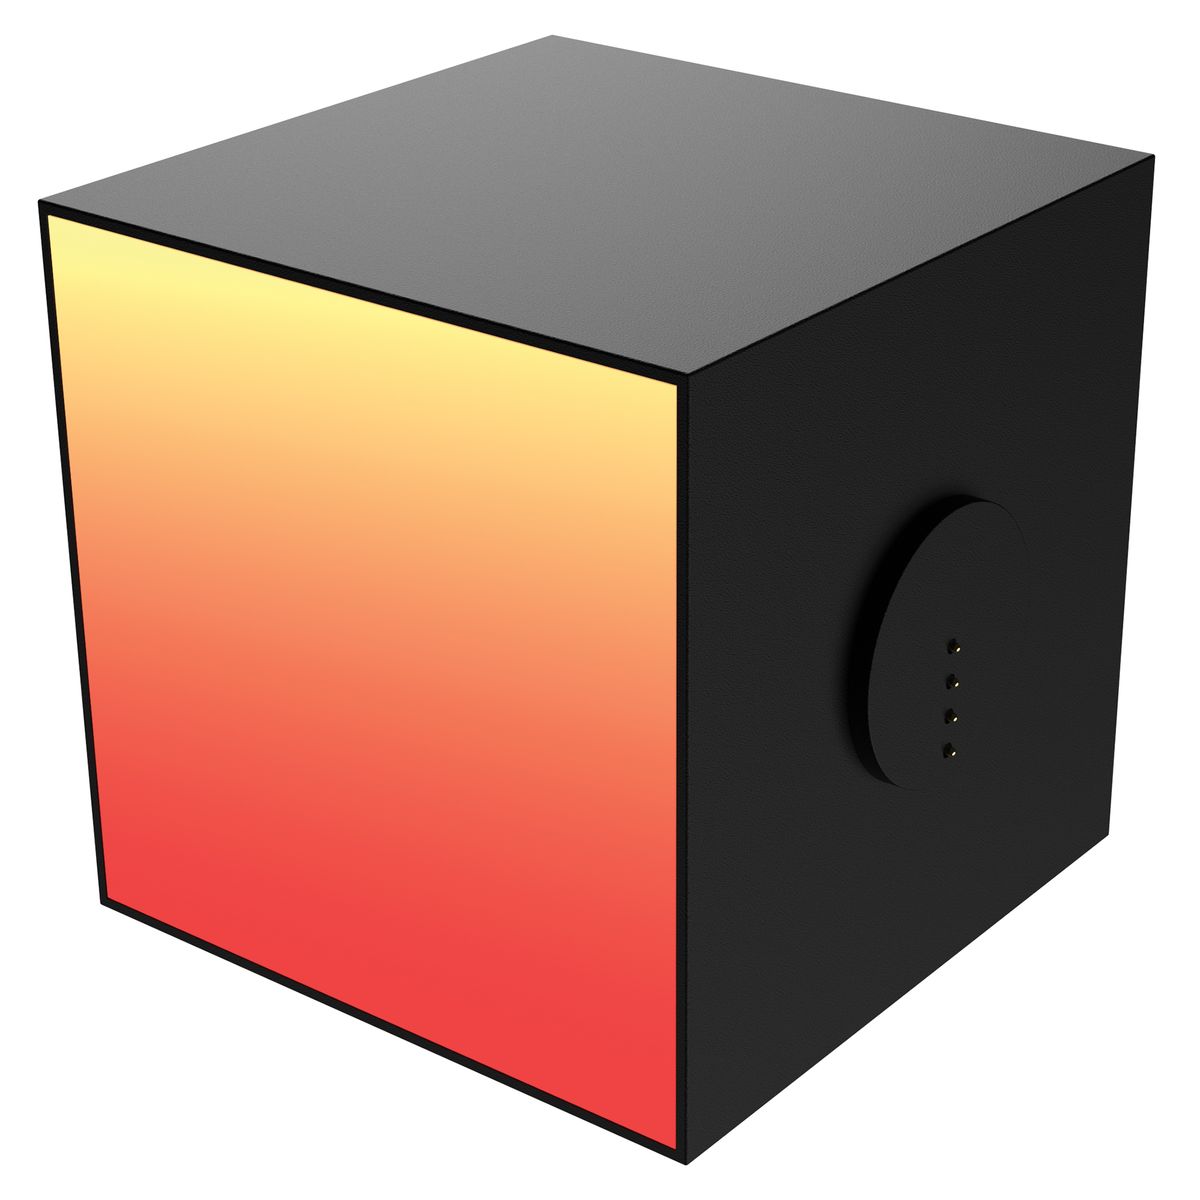 Yeelight Cube Smart Lamps w/ Matter (review) - Homekit News and